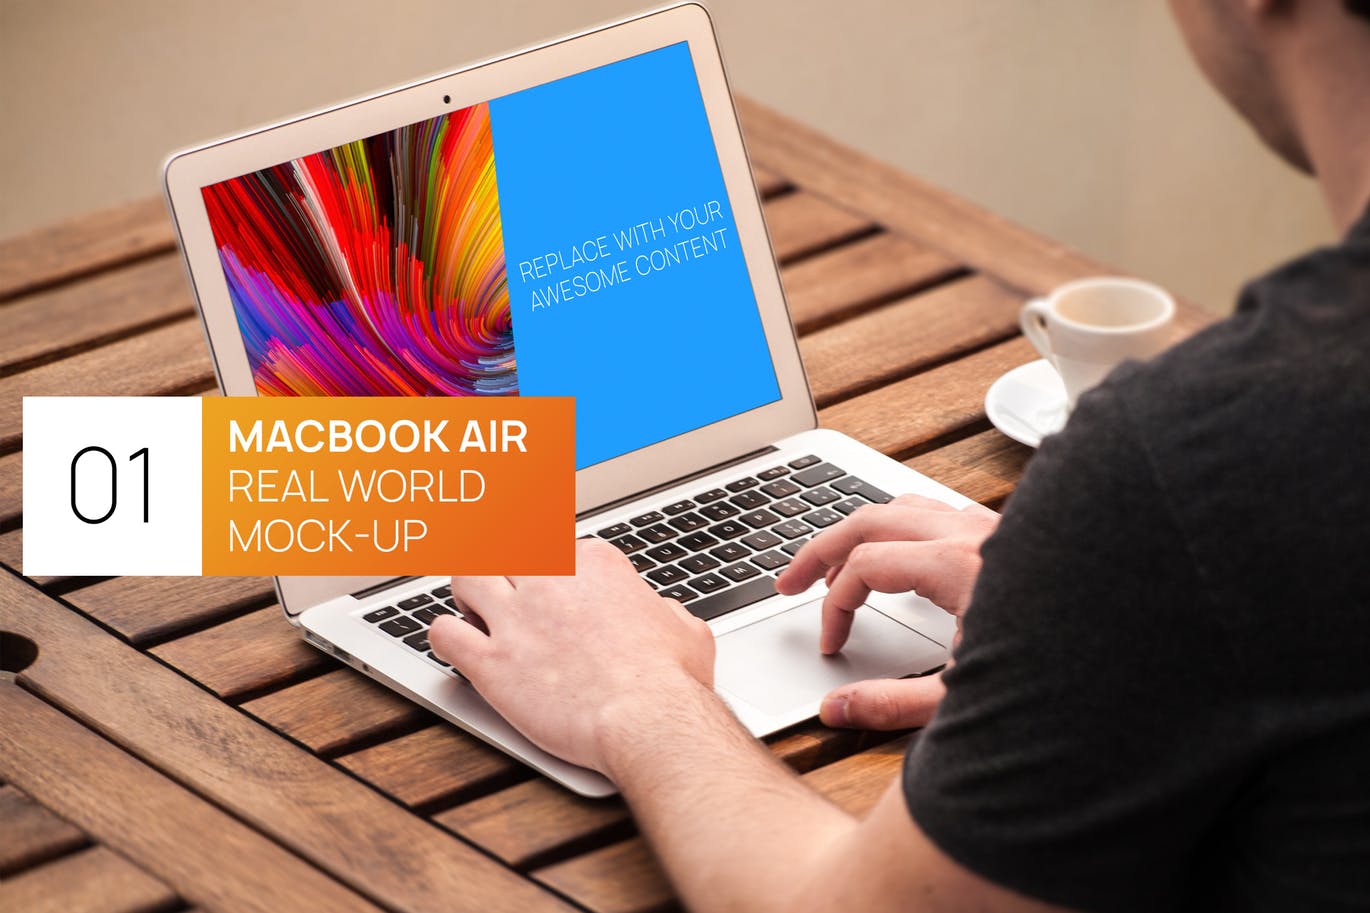 Macbook Air实景使用场景素材库精选样机模板v1 Person Using MacBook Air Real World Photo Mock-up插图